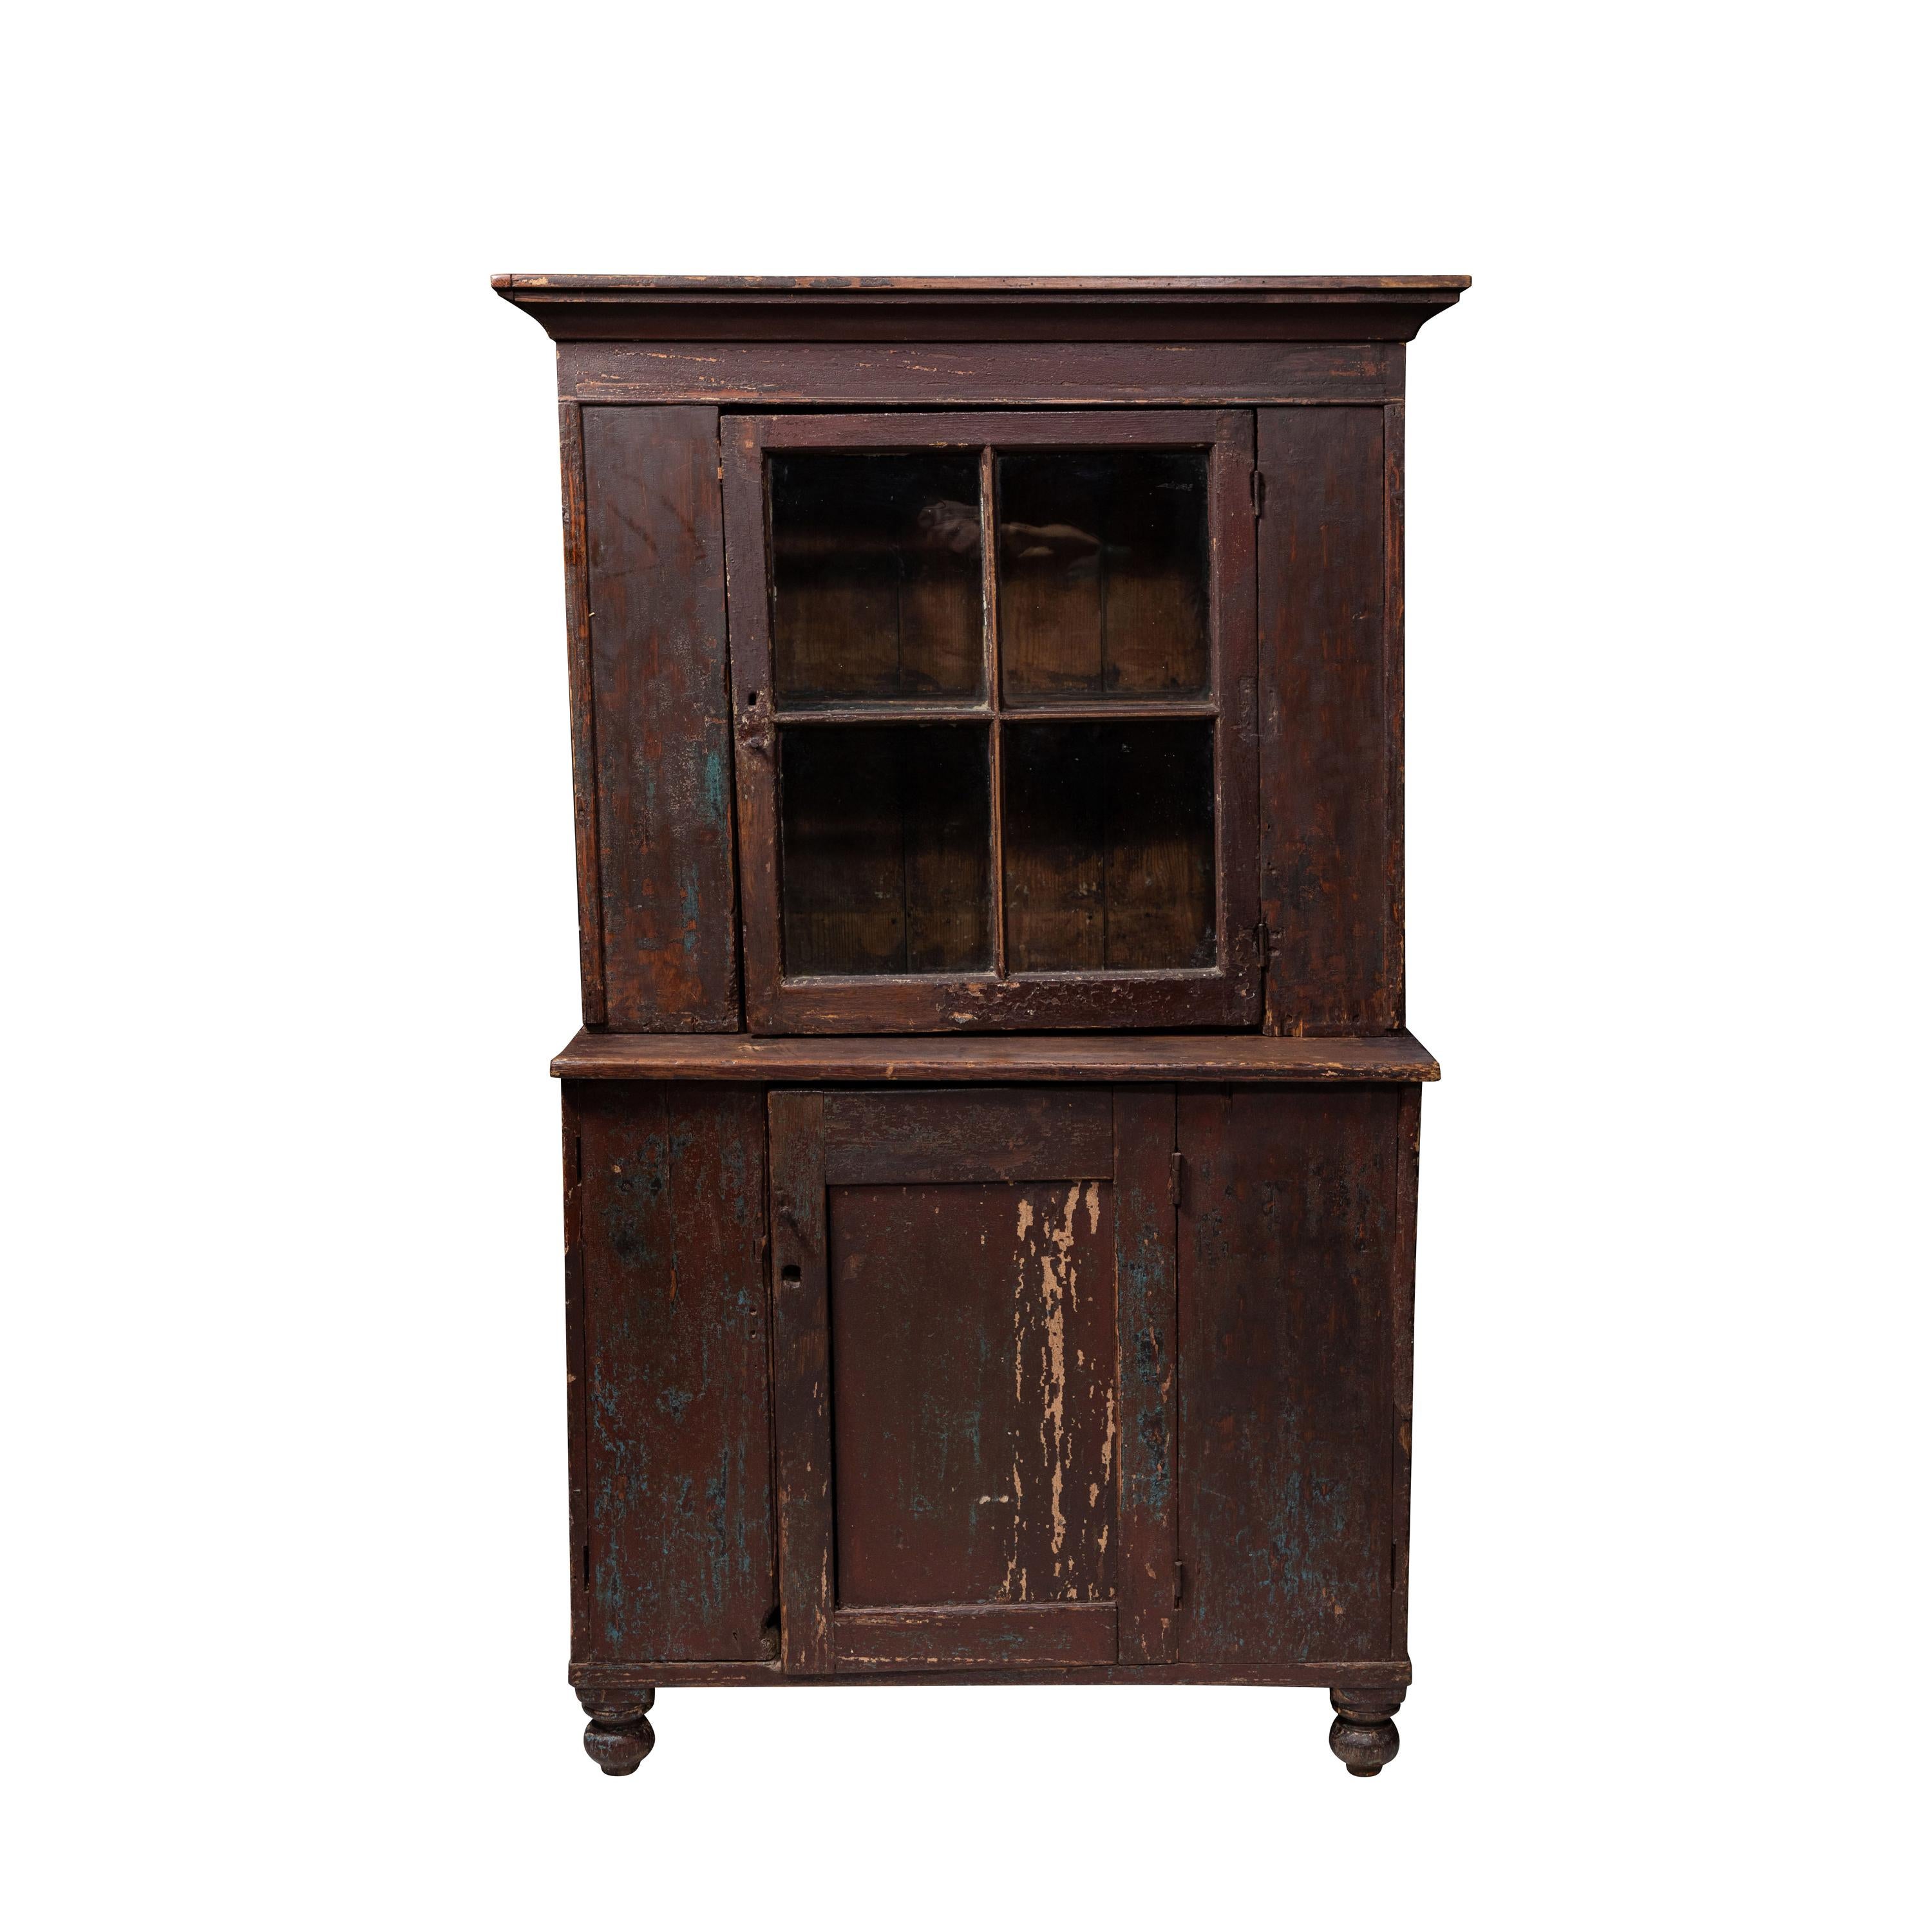 Early American Dark Wooden Hutch with Glass Door